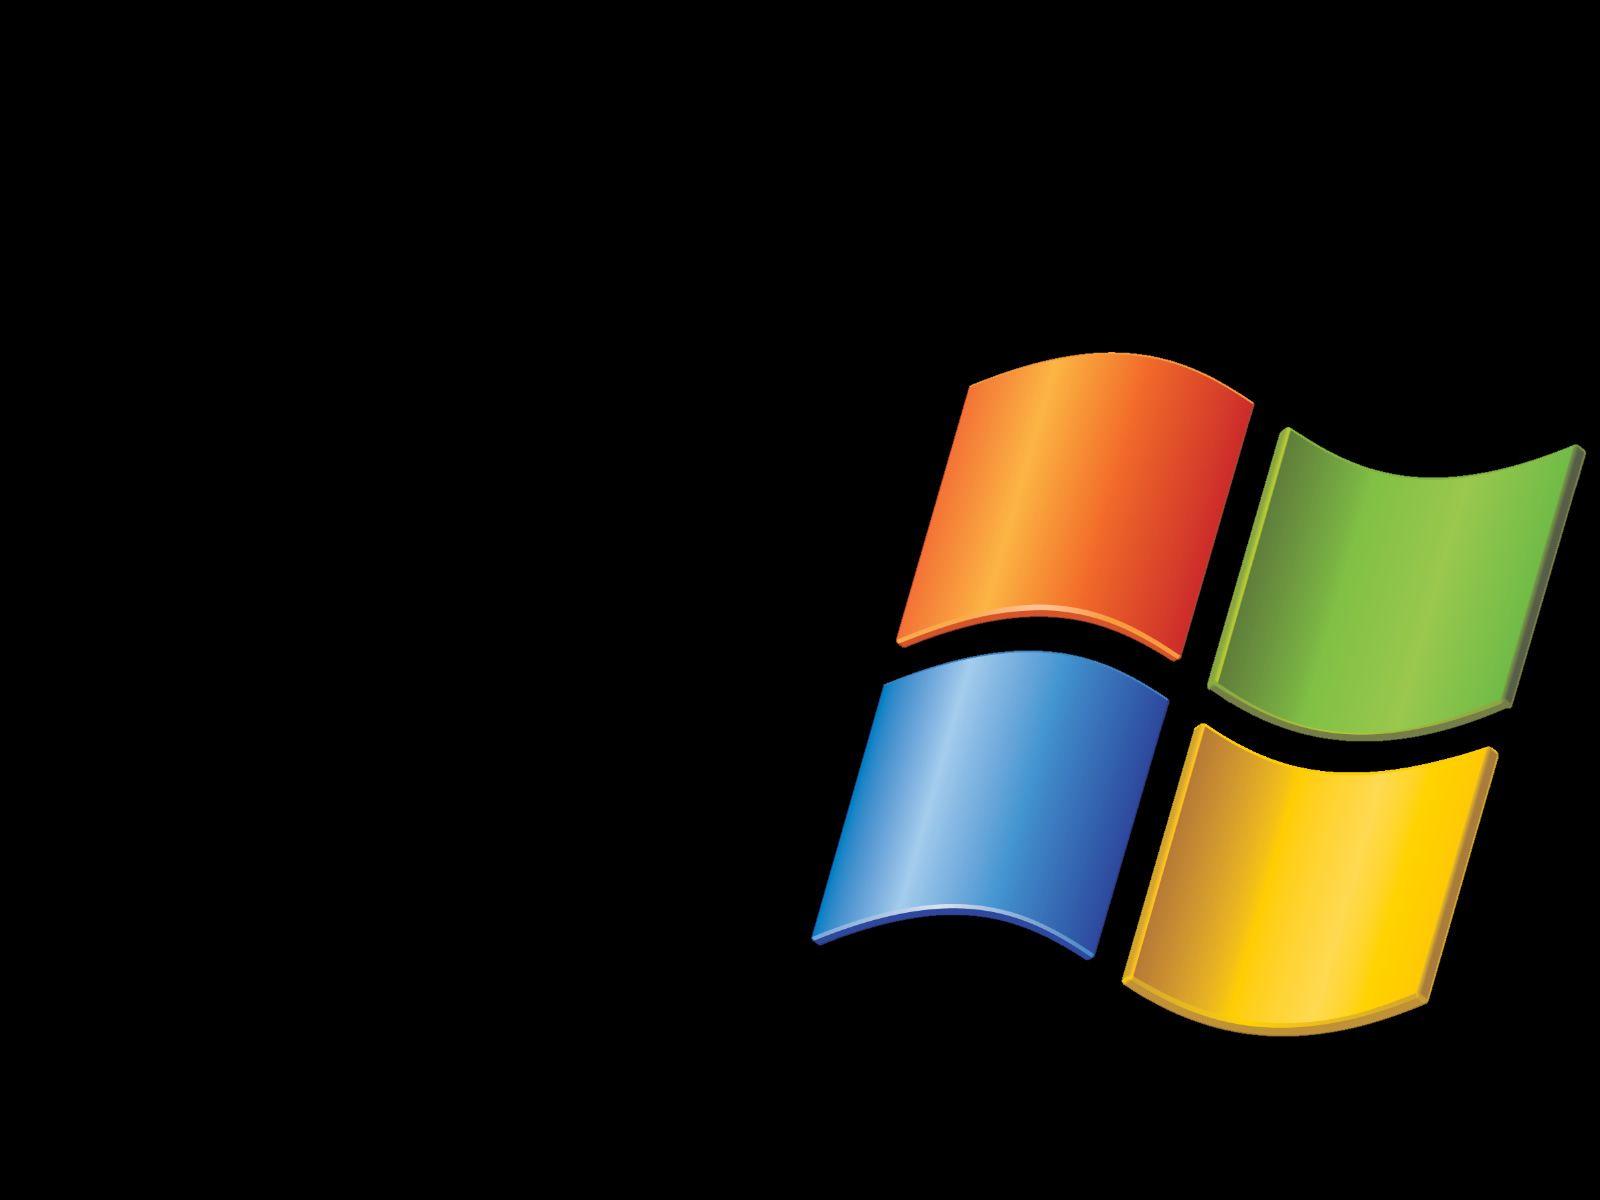 Windows Logo Black